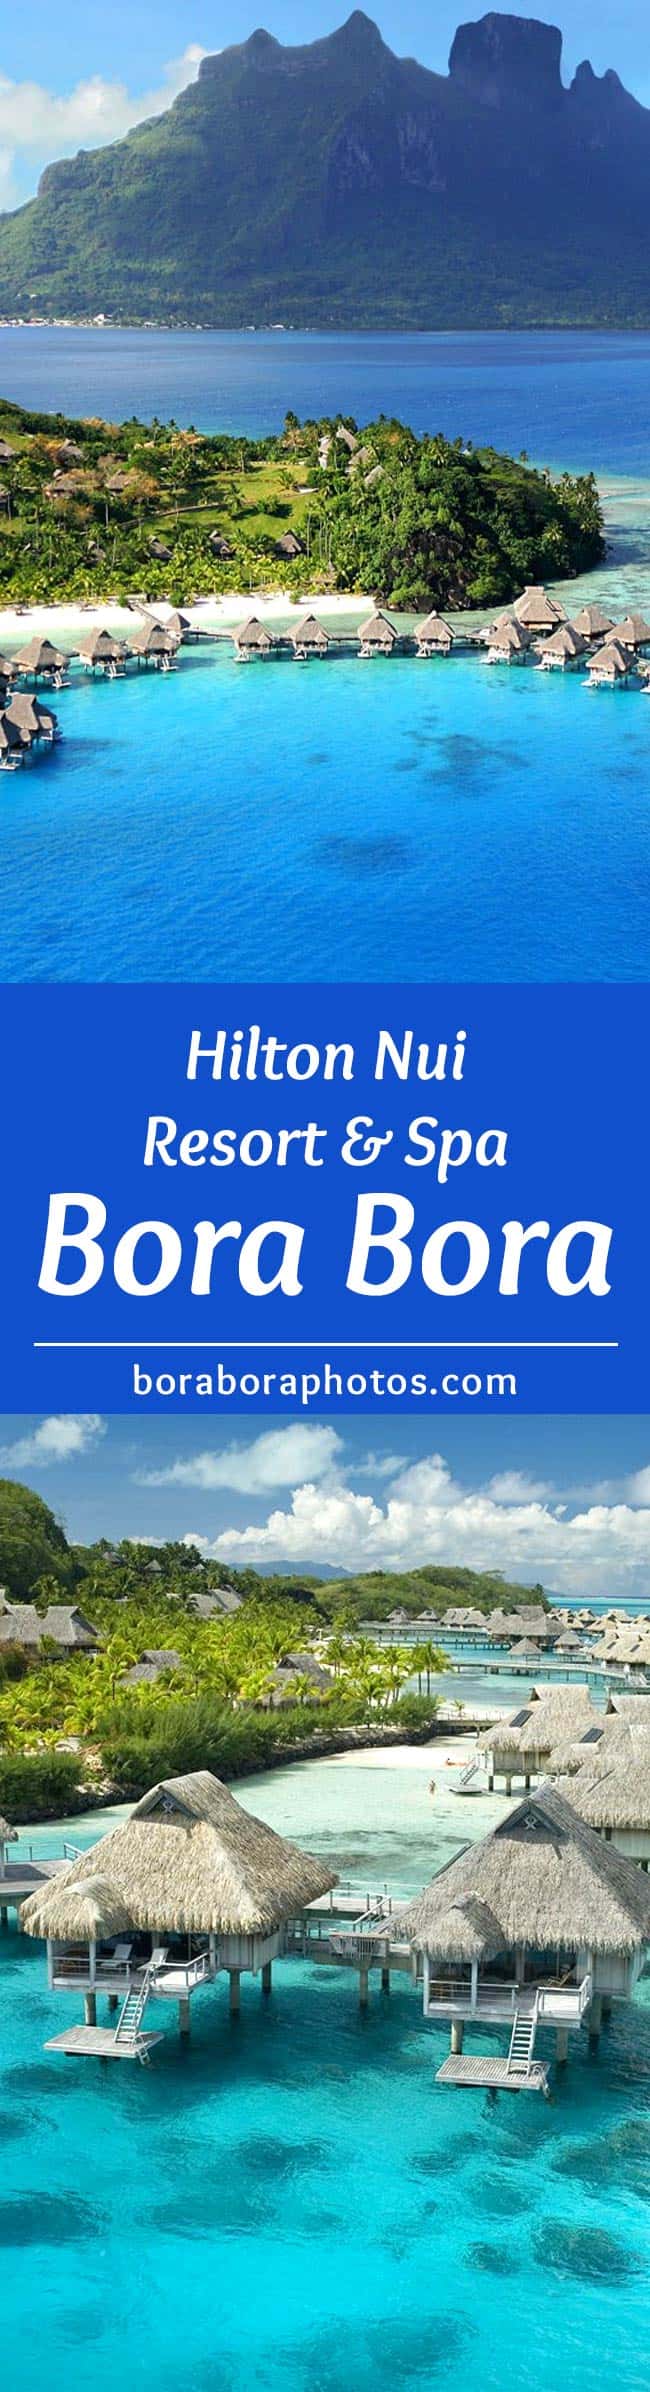 Conrad Bora Bora Nui Resort & Spa